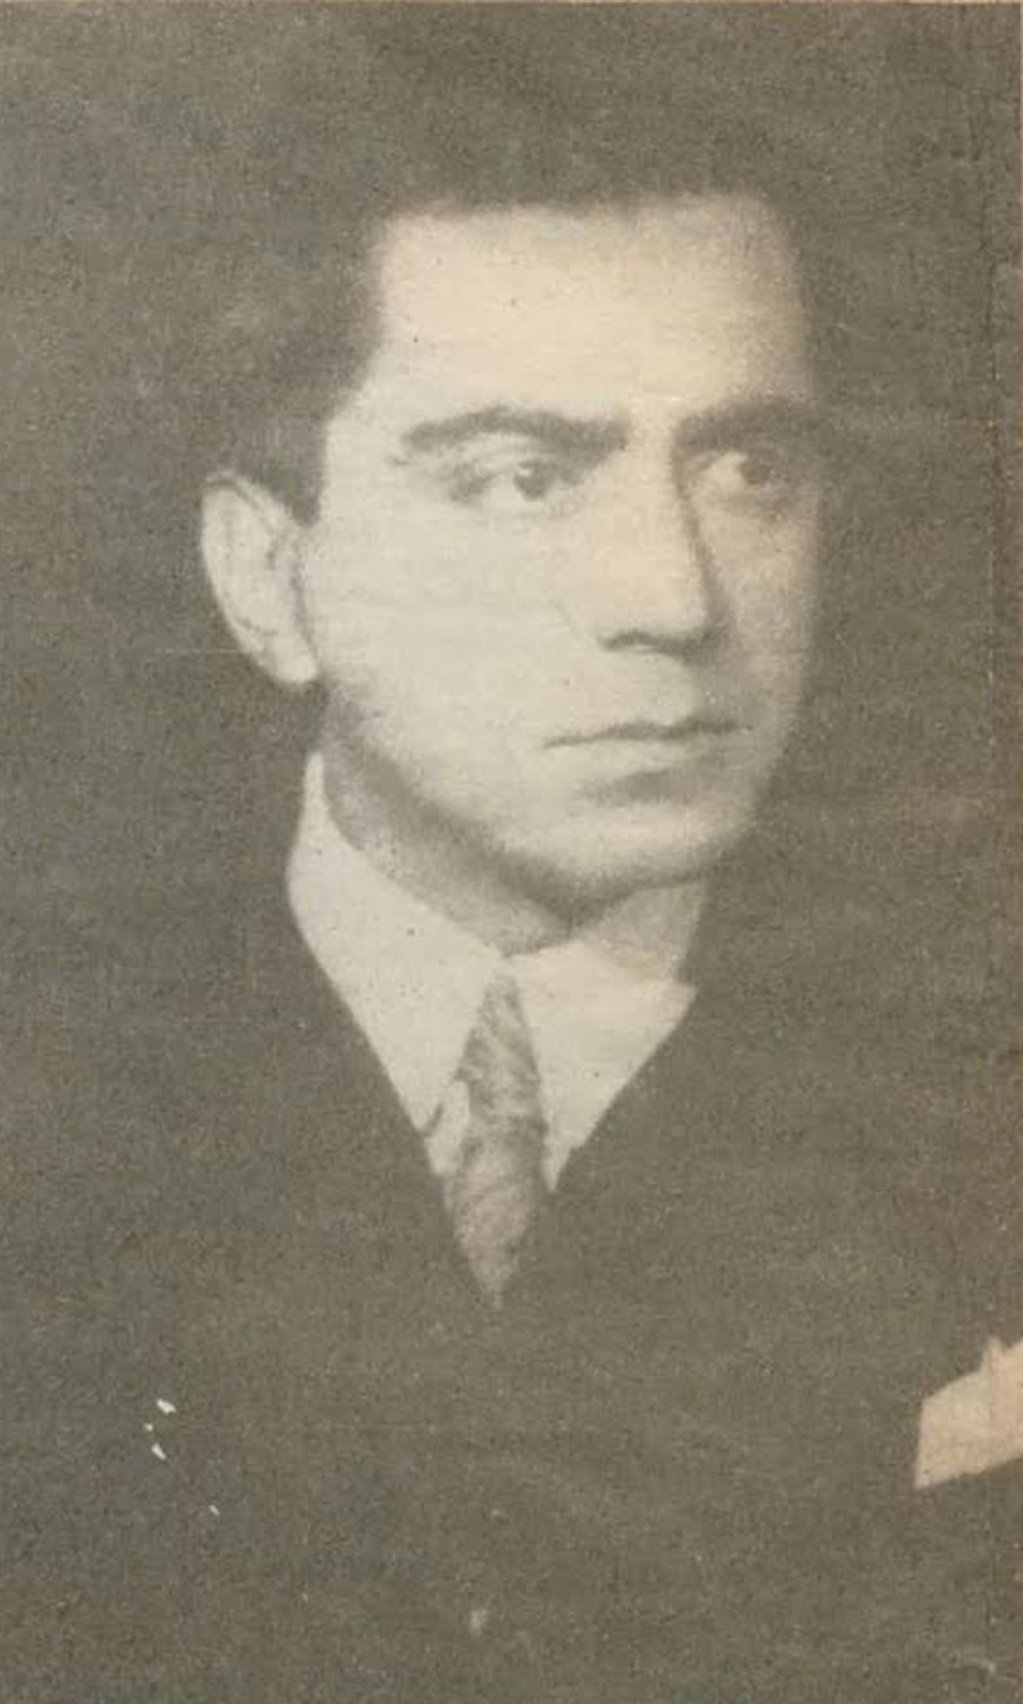 Mahmut Yesari